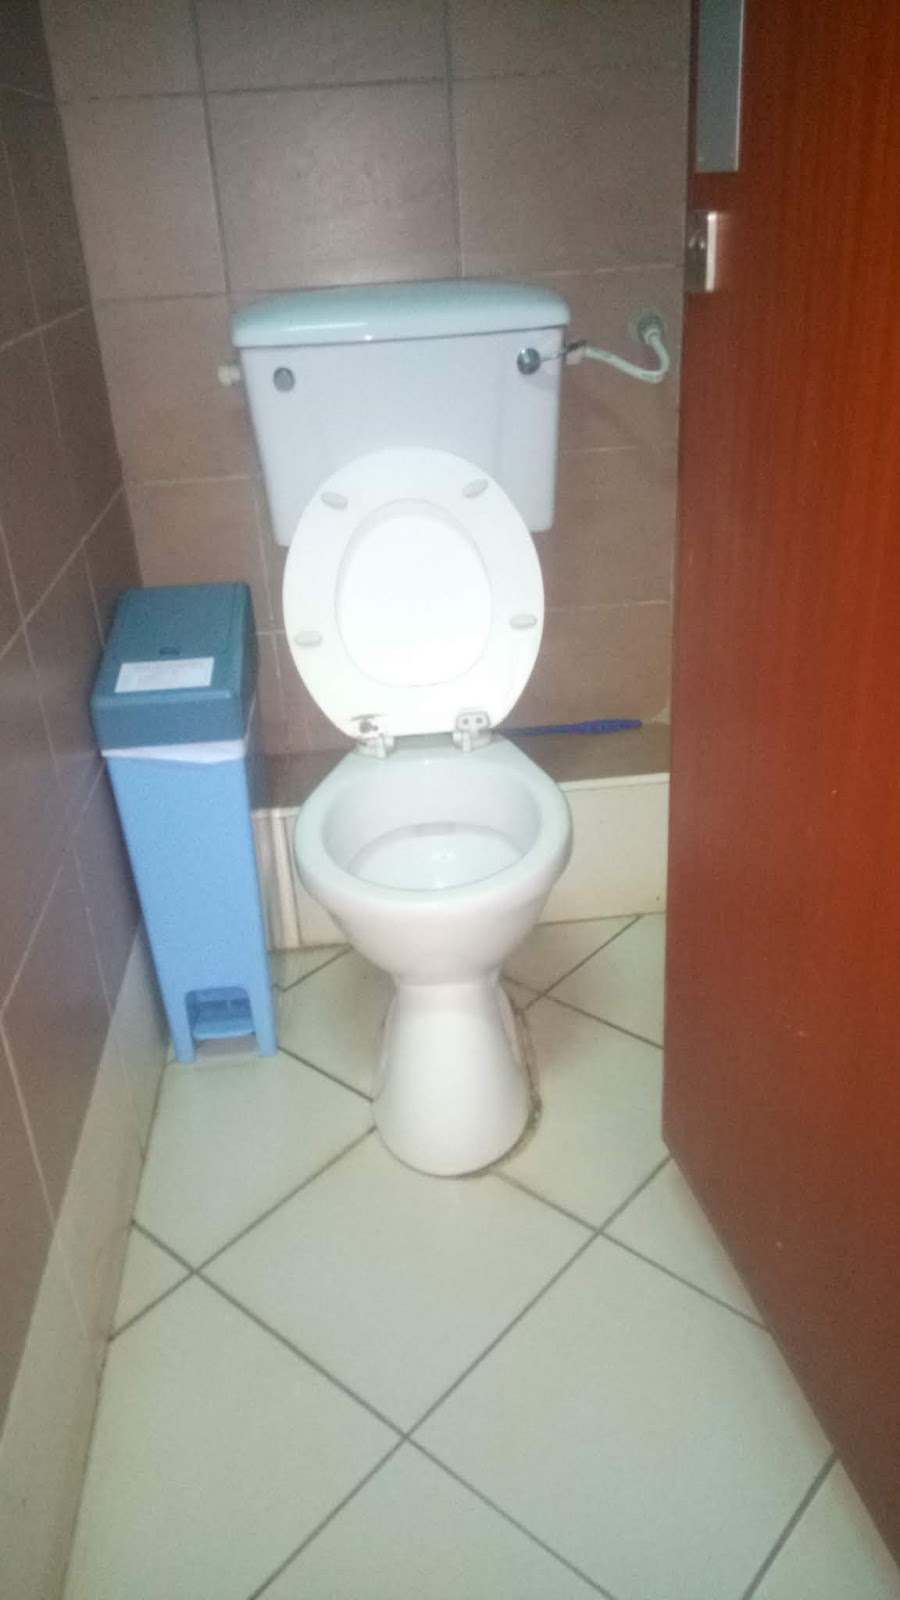 Mazingira Bora: The toilet 'privilege' in Kenya